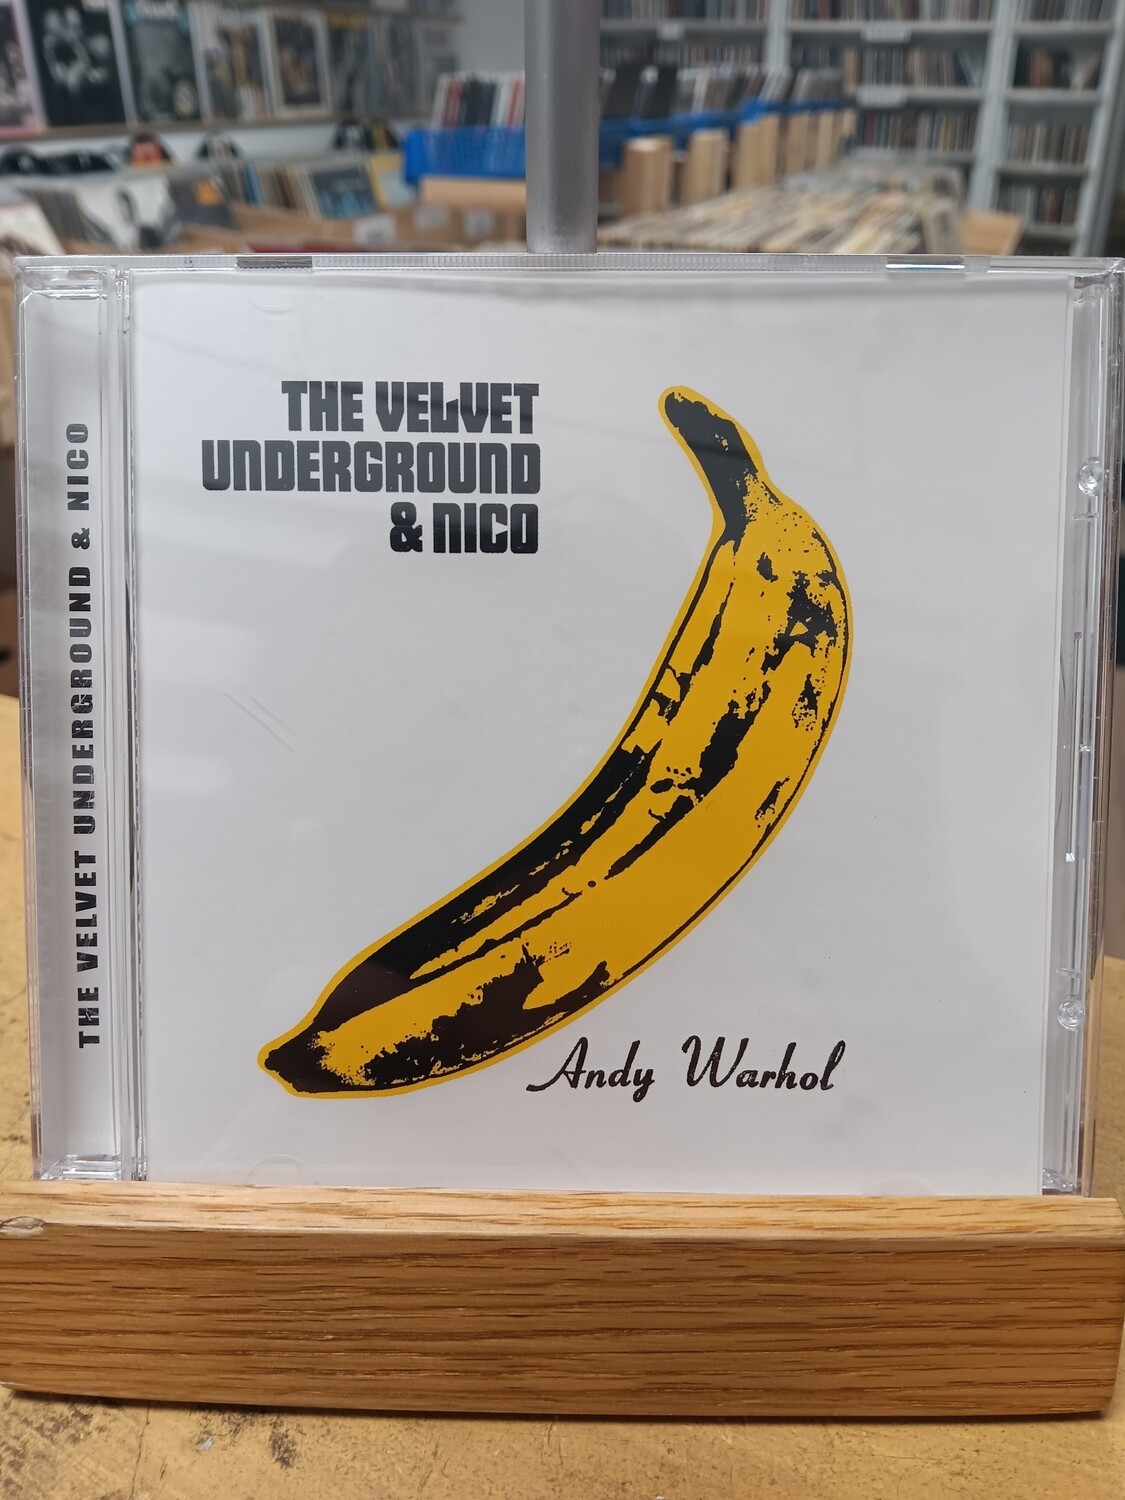 THE VELVET UNDERGROUND & NICO - The Velvet Underground & Nico (CD)